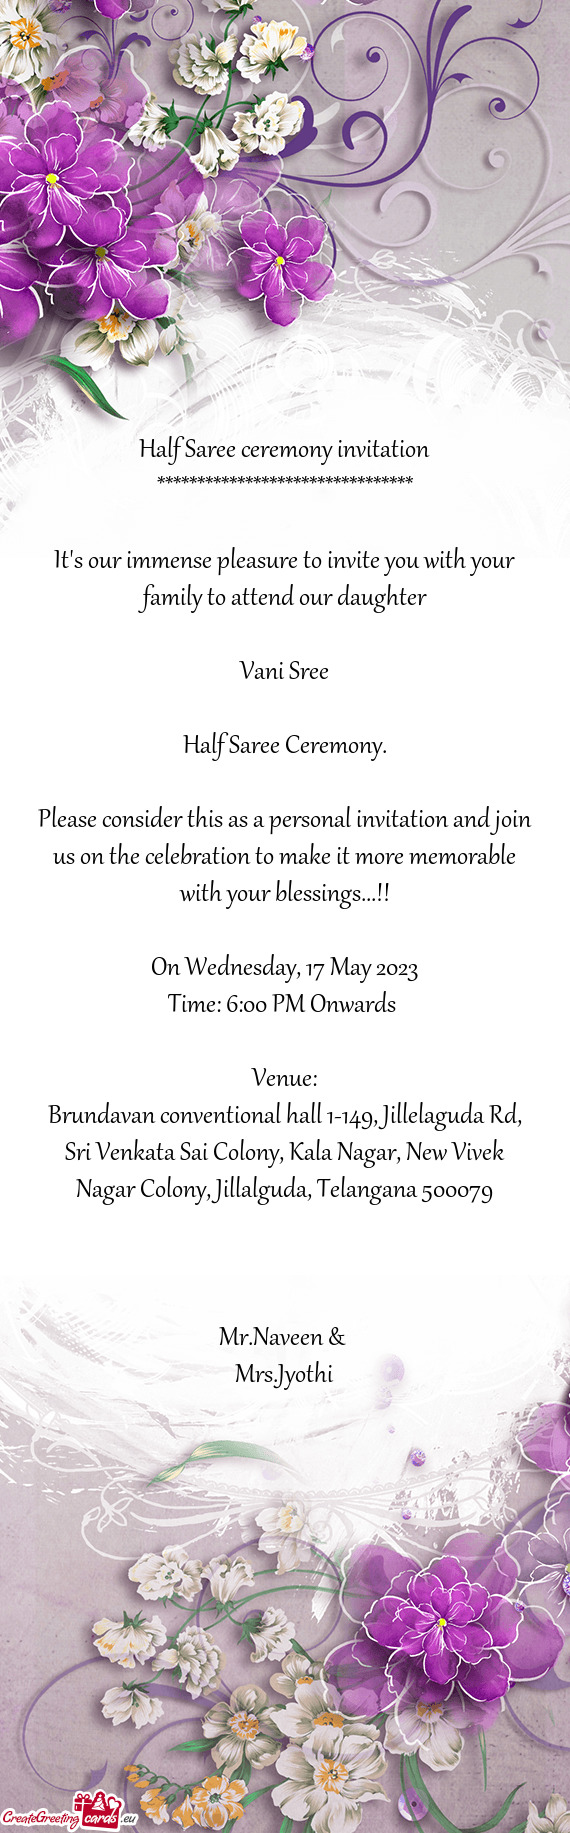 Brundavan conventional hall 1-149, Jillelaguda Rd, Sri Venkata Sai Colony, Kala Nagar, New Vivek Nag